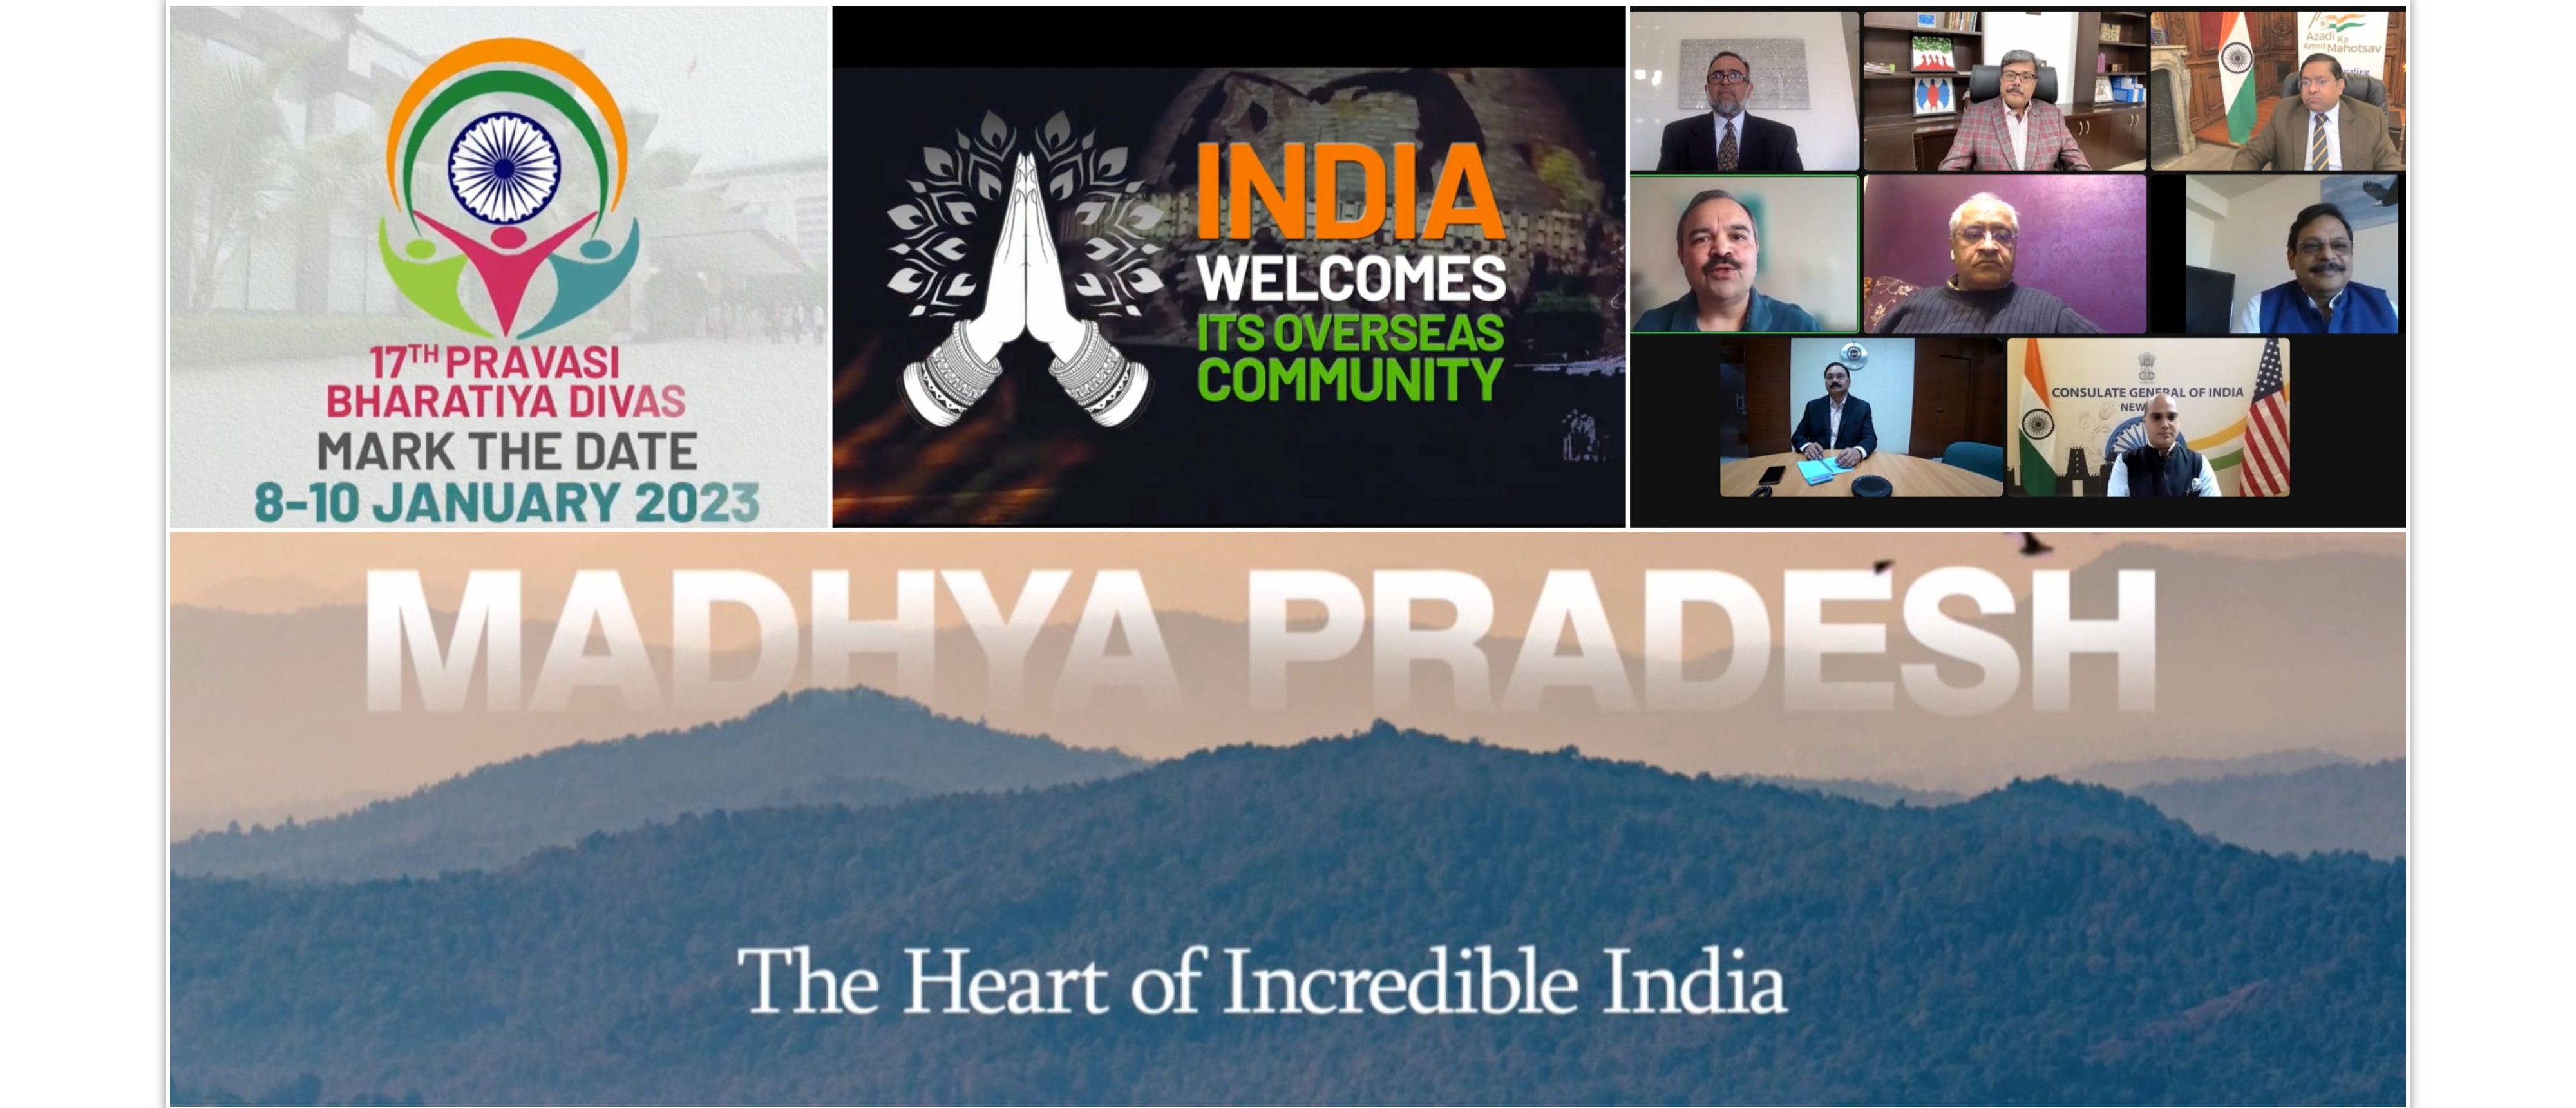  Webinar on Madhya Pradesh Tourism on myriad tourism attractions in Madhya Pradesh as Indian diaspora heads to Indore for 17th Pravasi Bharatiya Divas from 8-10 January 2023